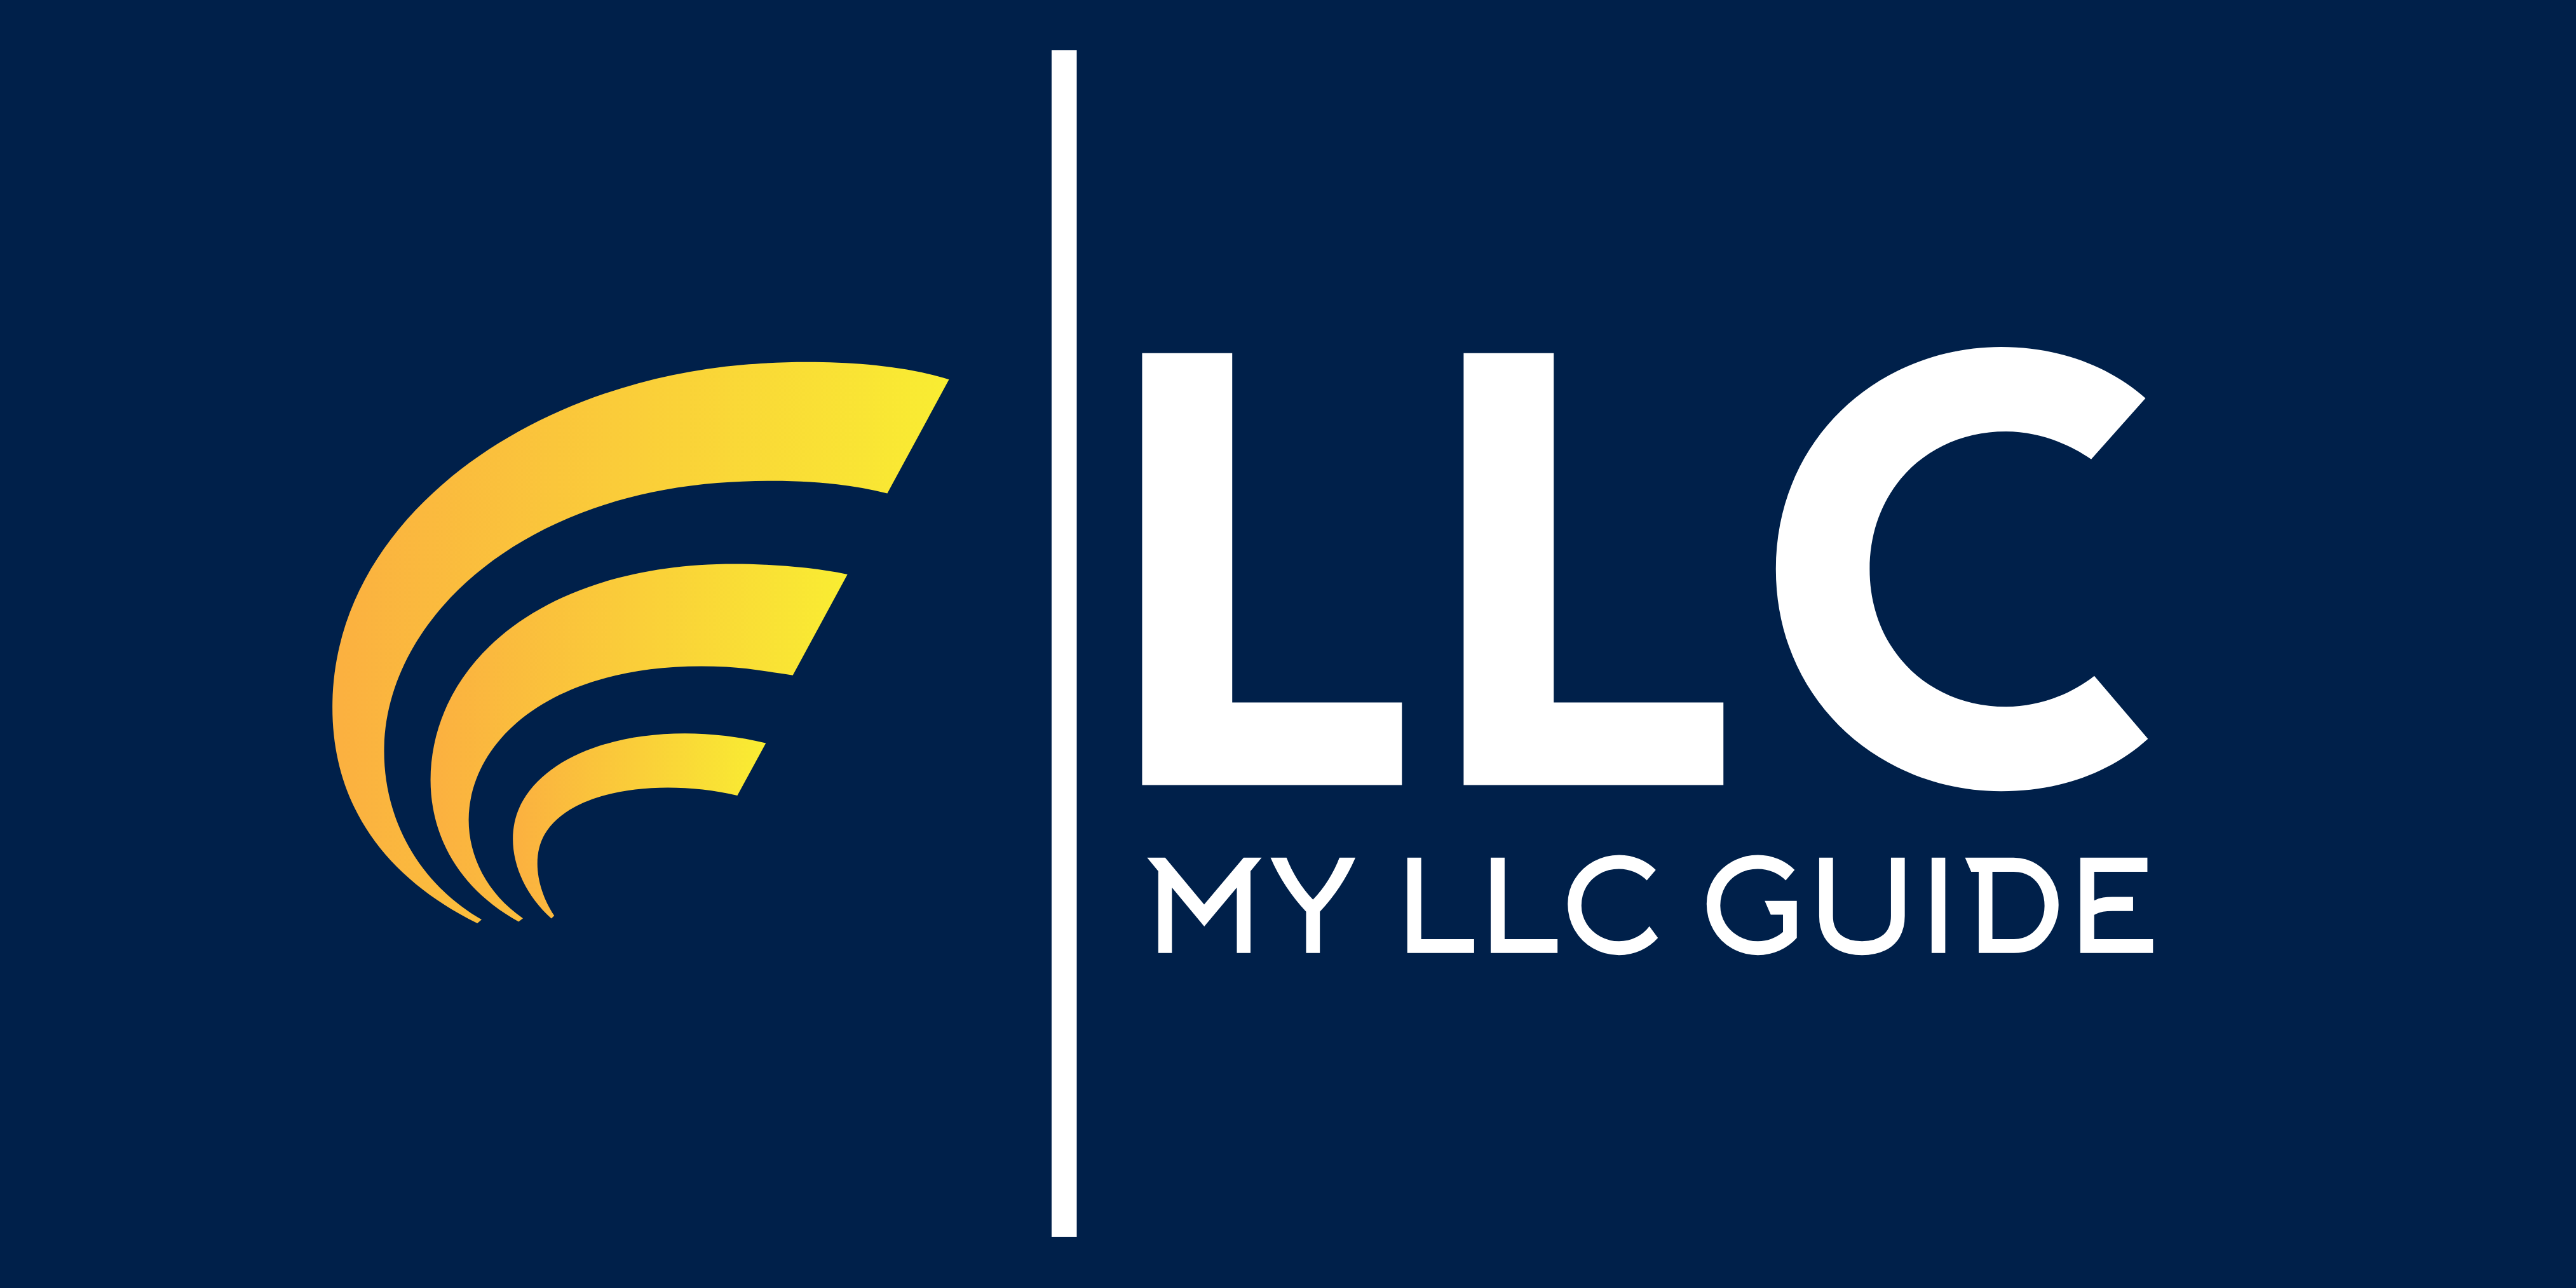 My LLC Guide - Banner Logo